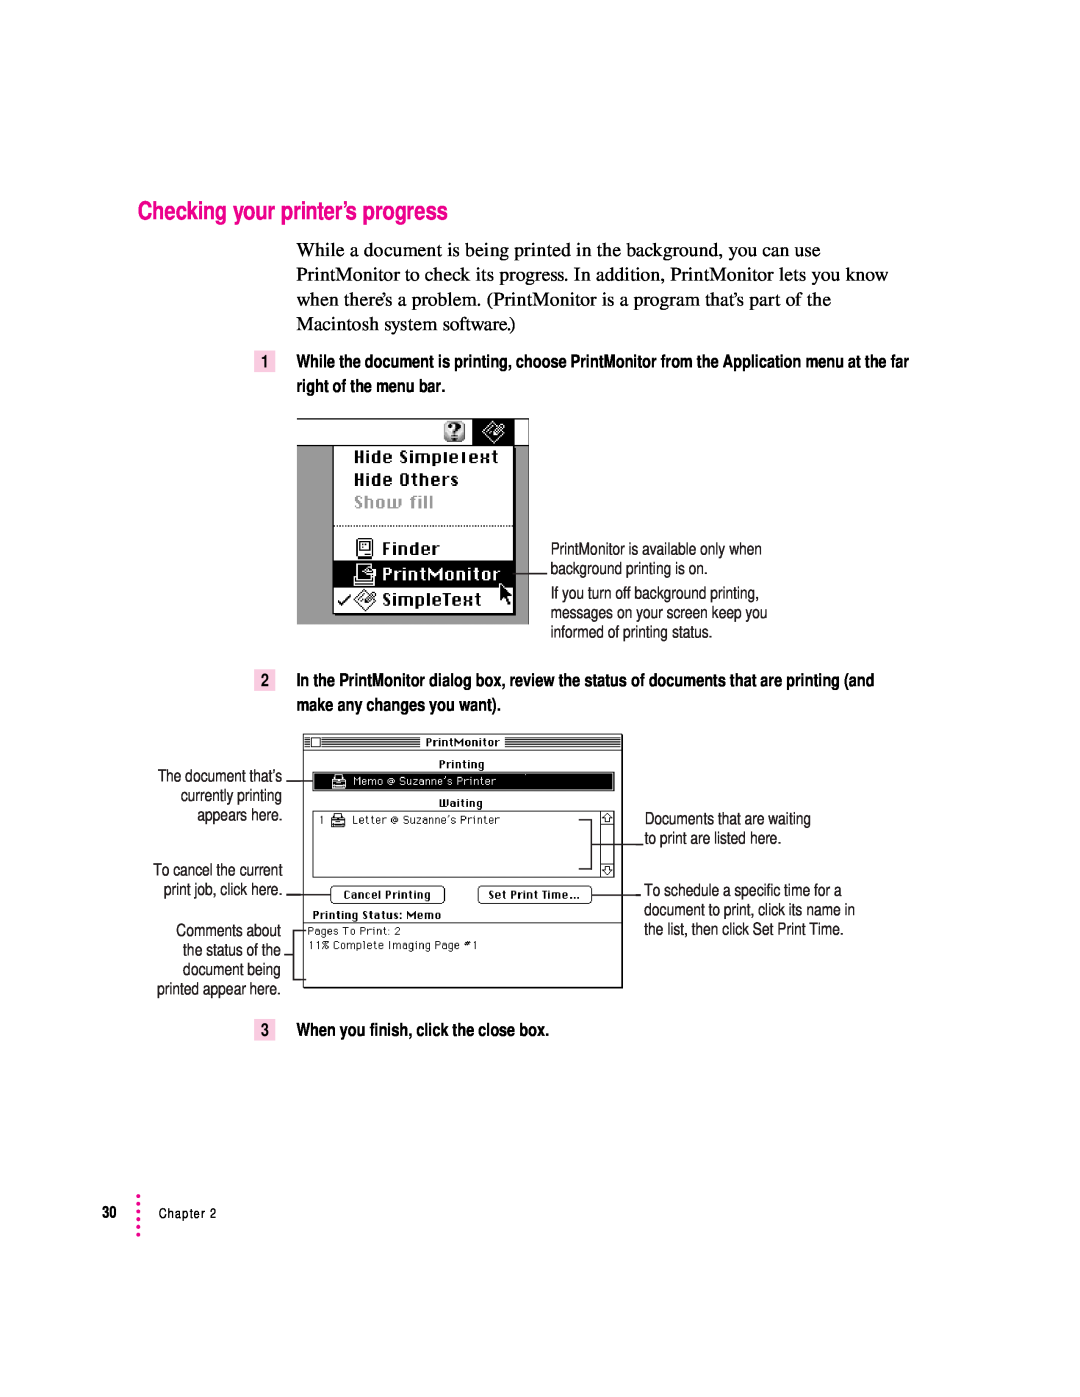 Apple 2400 manual Checking your printer’s progress, When you finish, click the close box 